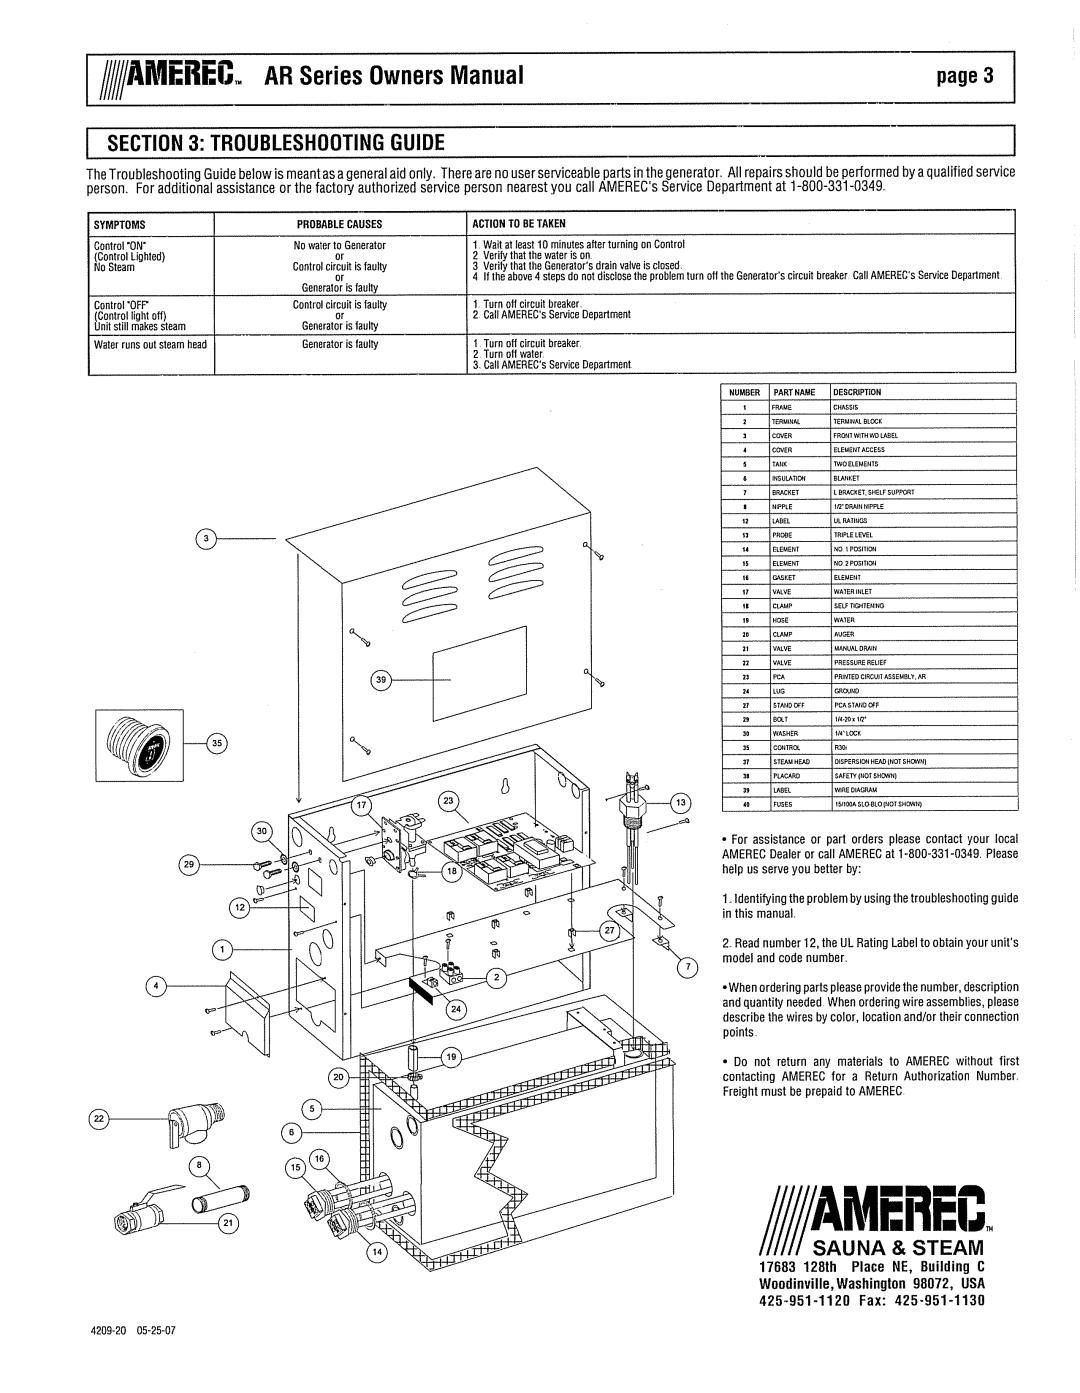 Amerec AR Series manual 